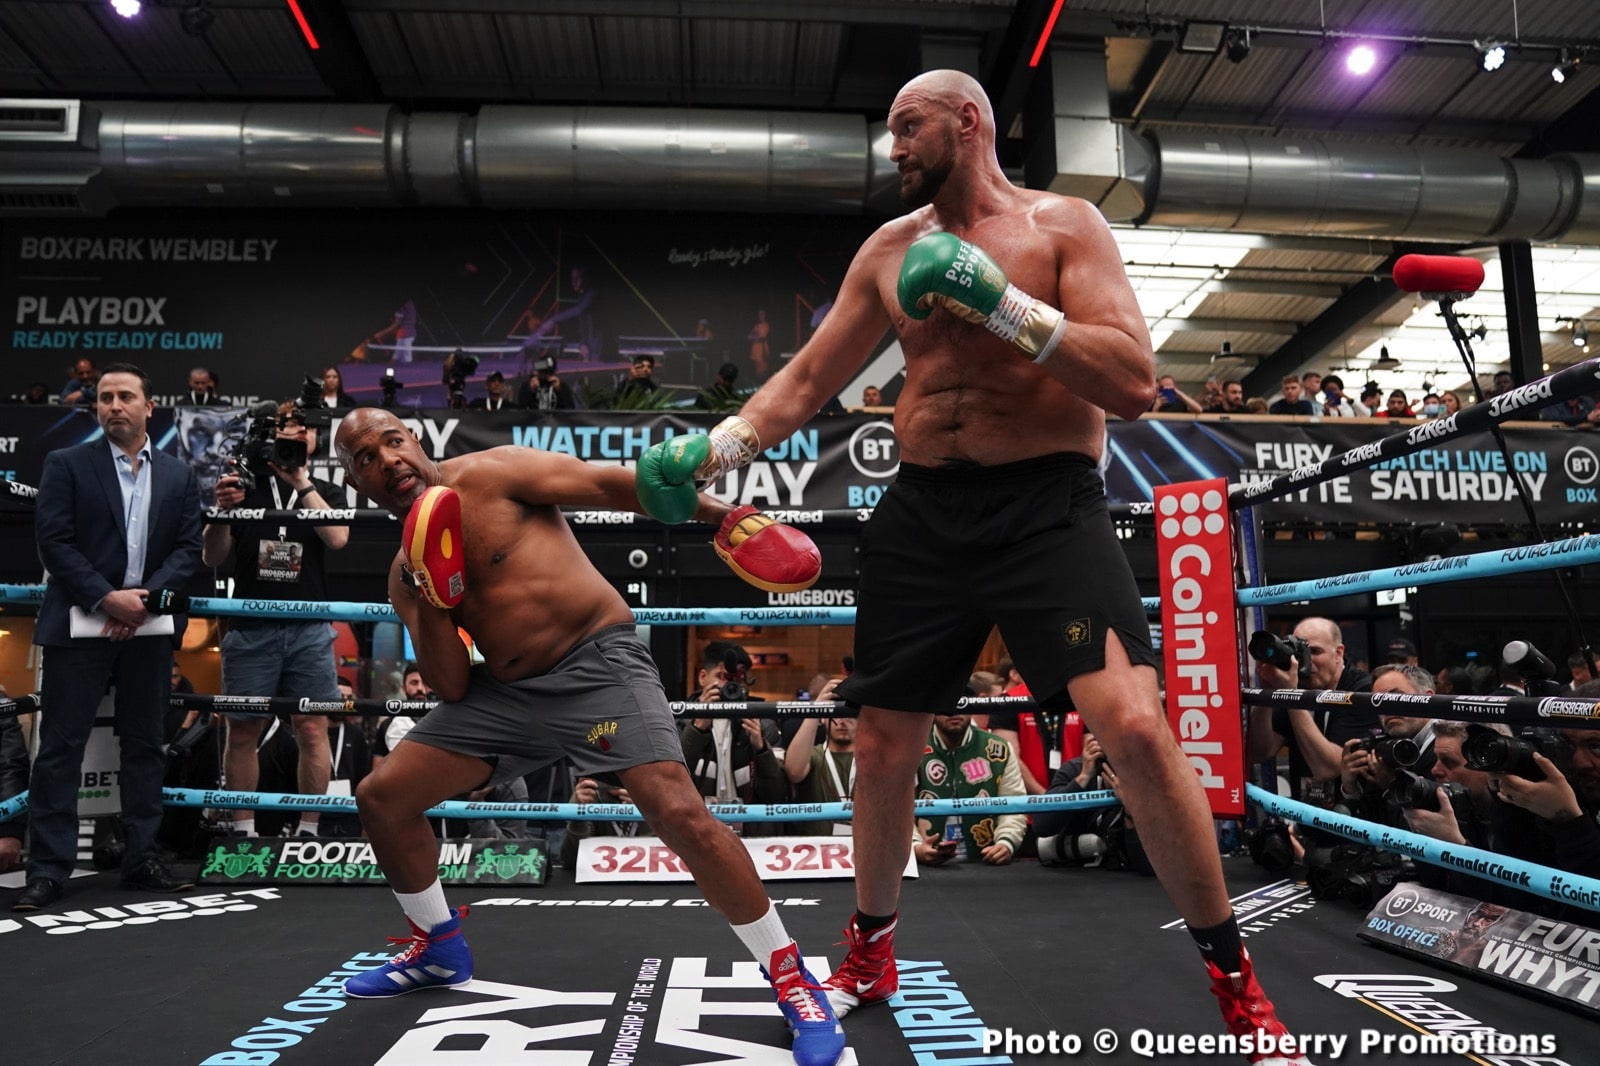 Dillian Whyte, Tyson Fury boxing image / photo